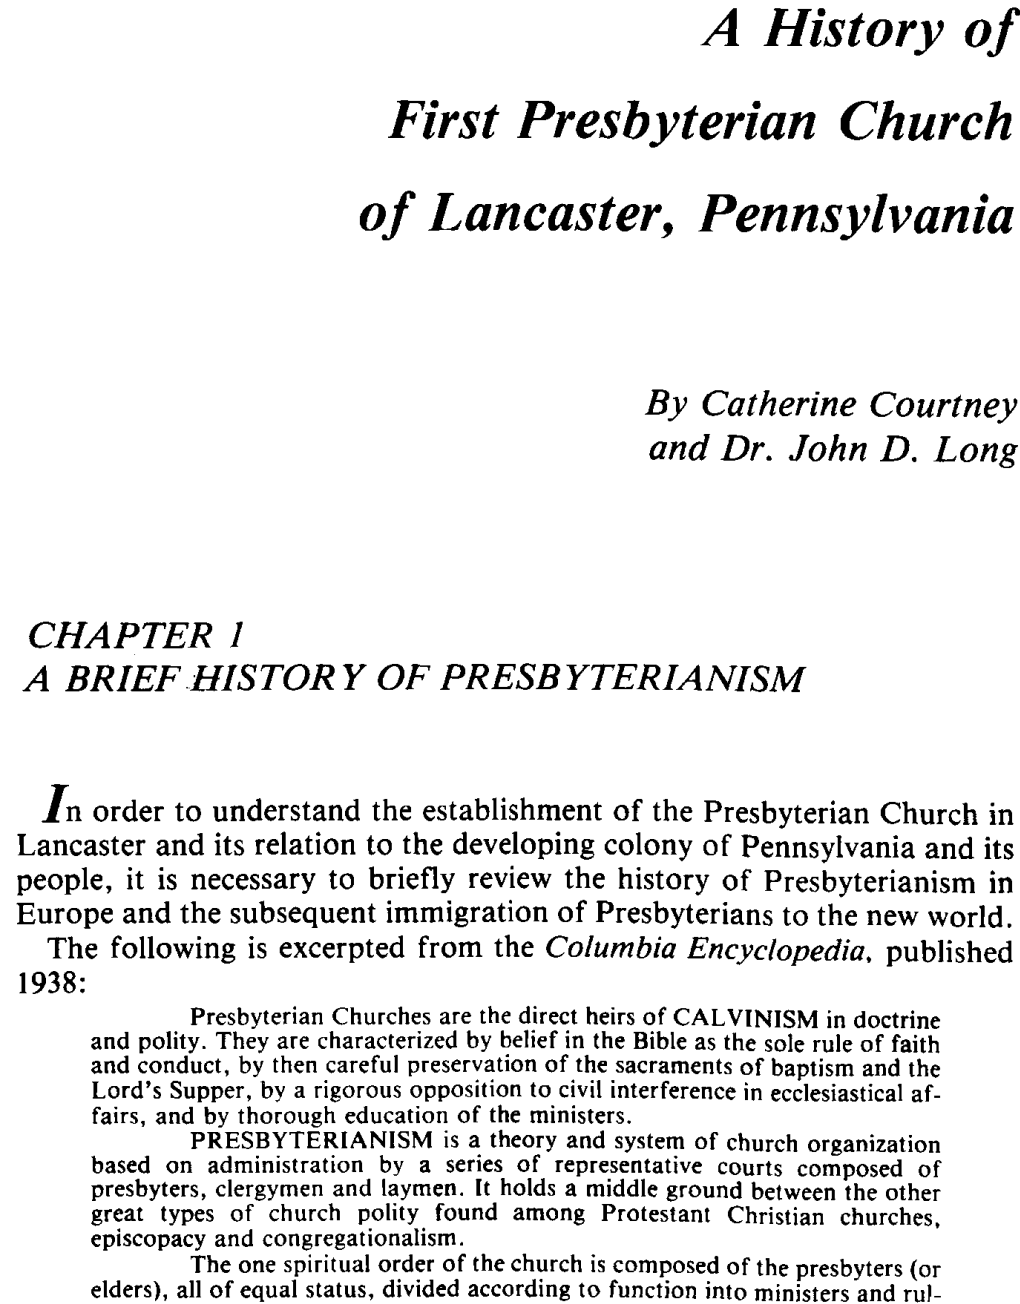 A History of First Presbyterian Church of Lancaster, Pennsylvania